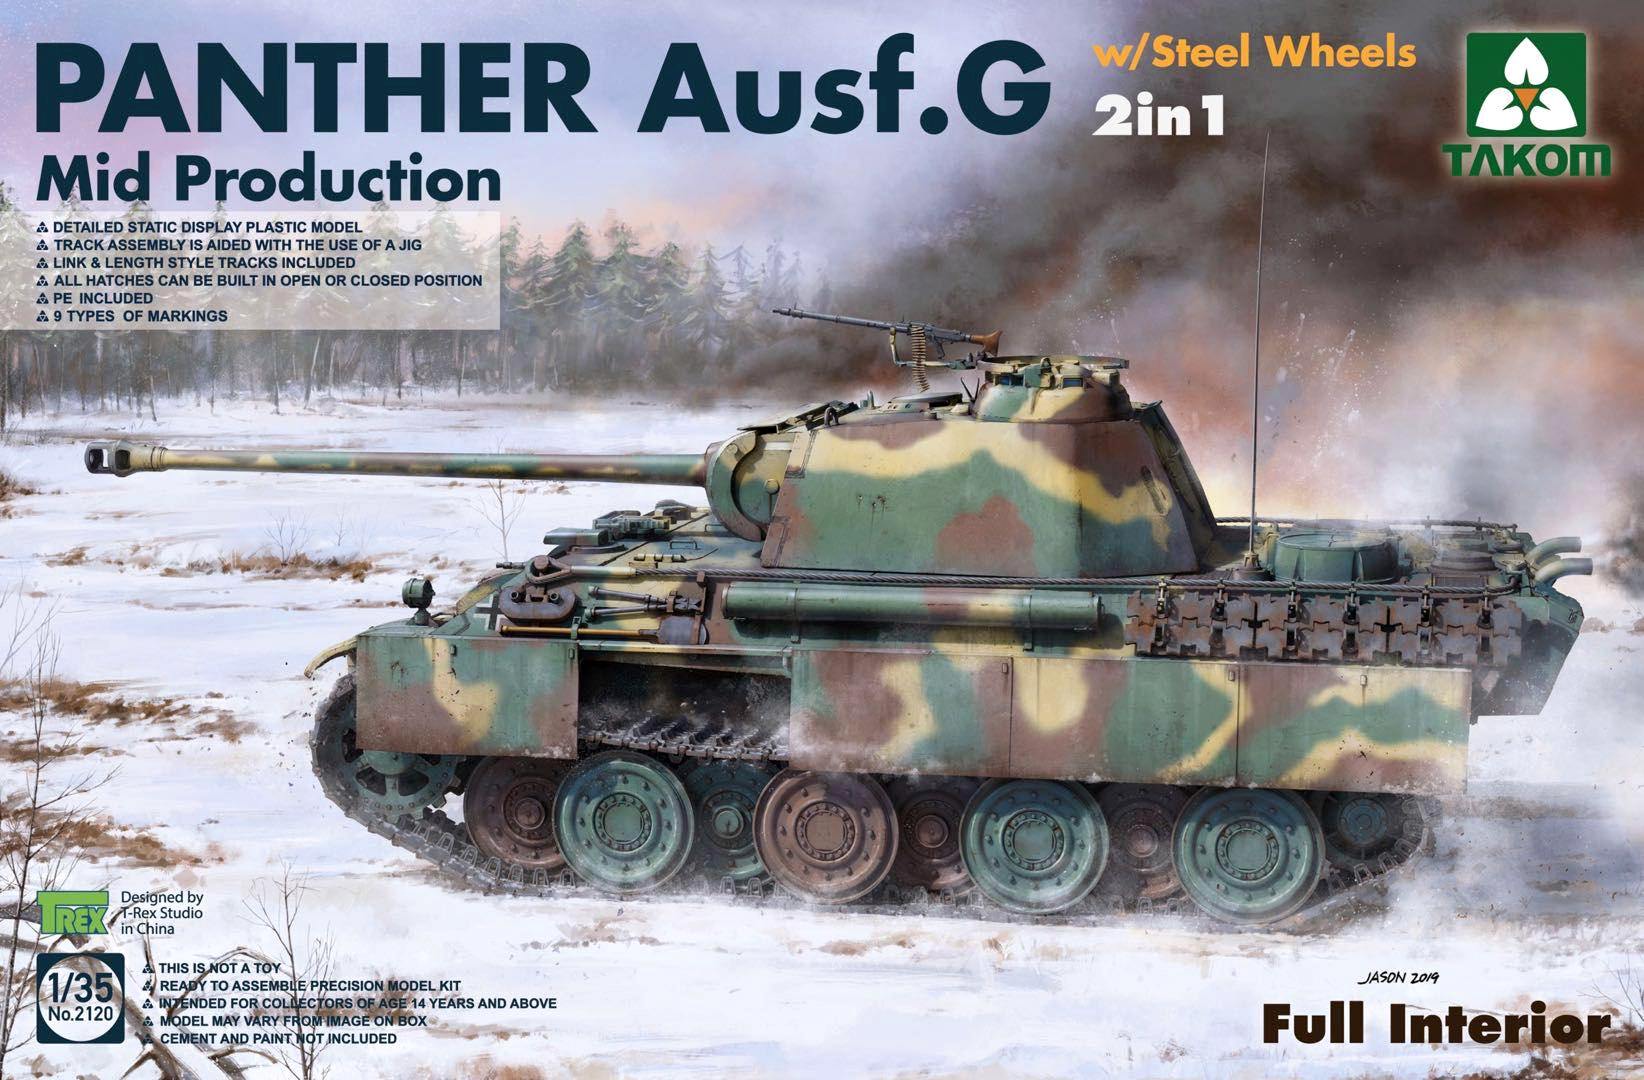 German Panther Ausf.G Mid prod. w/ Steel Wheels + Interior (2 in 1)